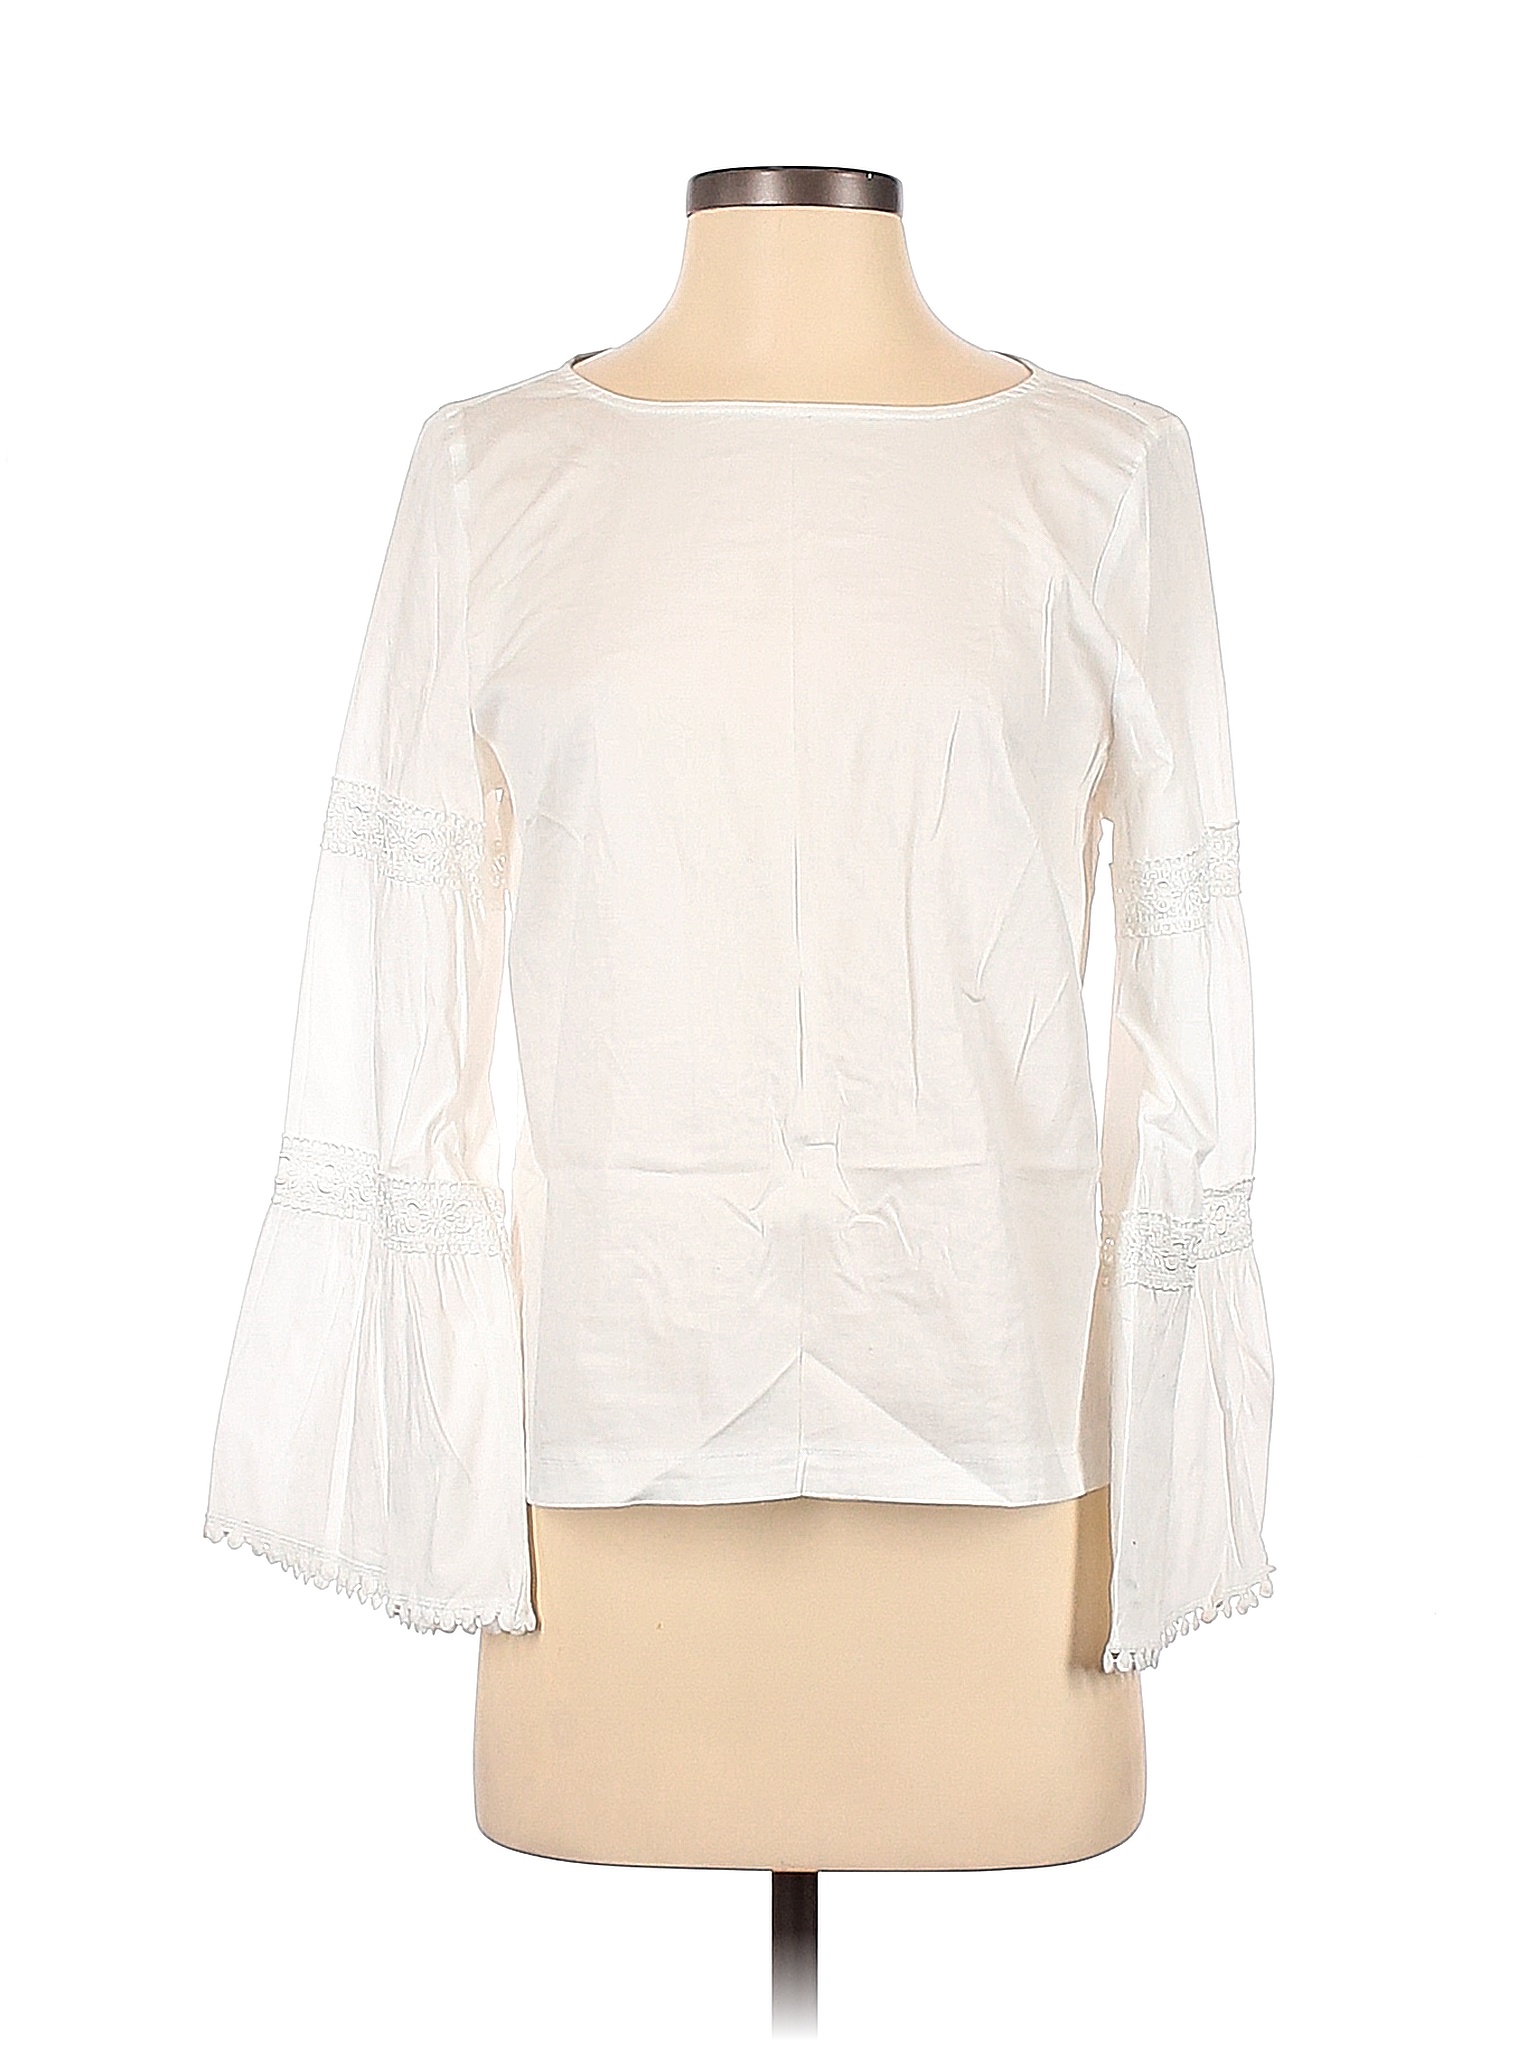 NANETTE Nanette Lepore Solid Colored White Long Sleeve Blouse Size S ...